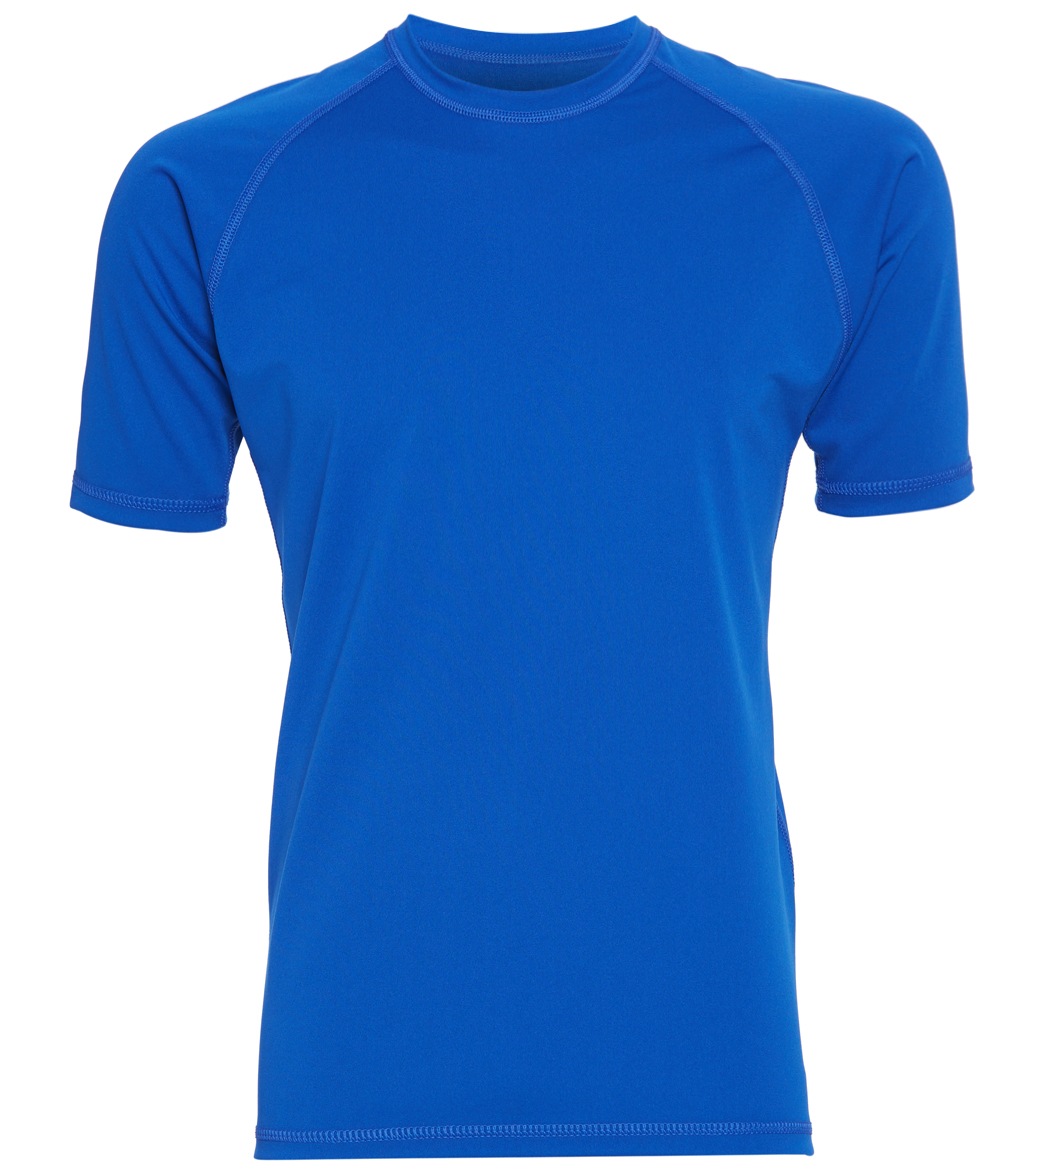 Victory Koredry Safesplash Men's Short Sleeve Chlorine Resistant Rashguard Shirt - Royal Blue 3Xl - Swimoutlet.com